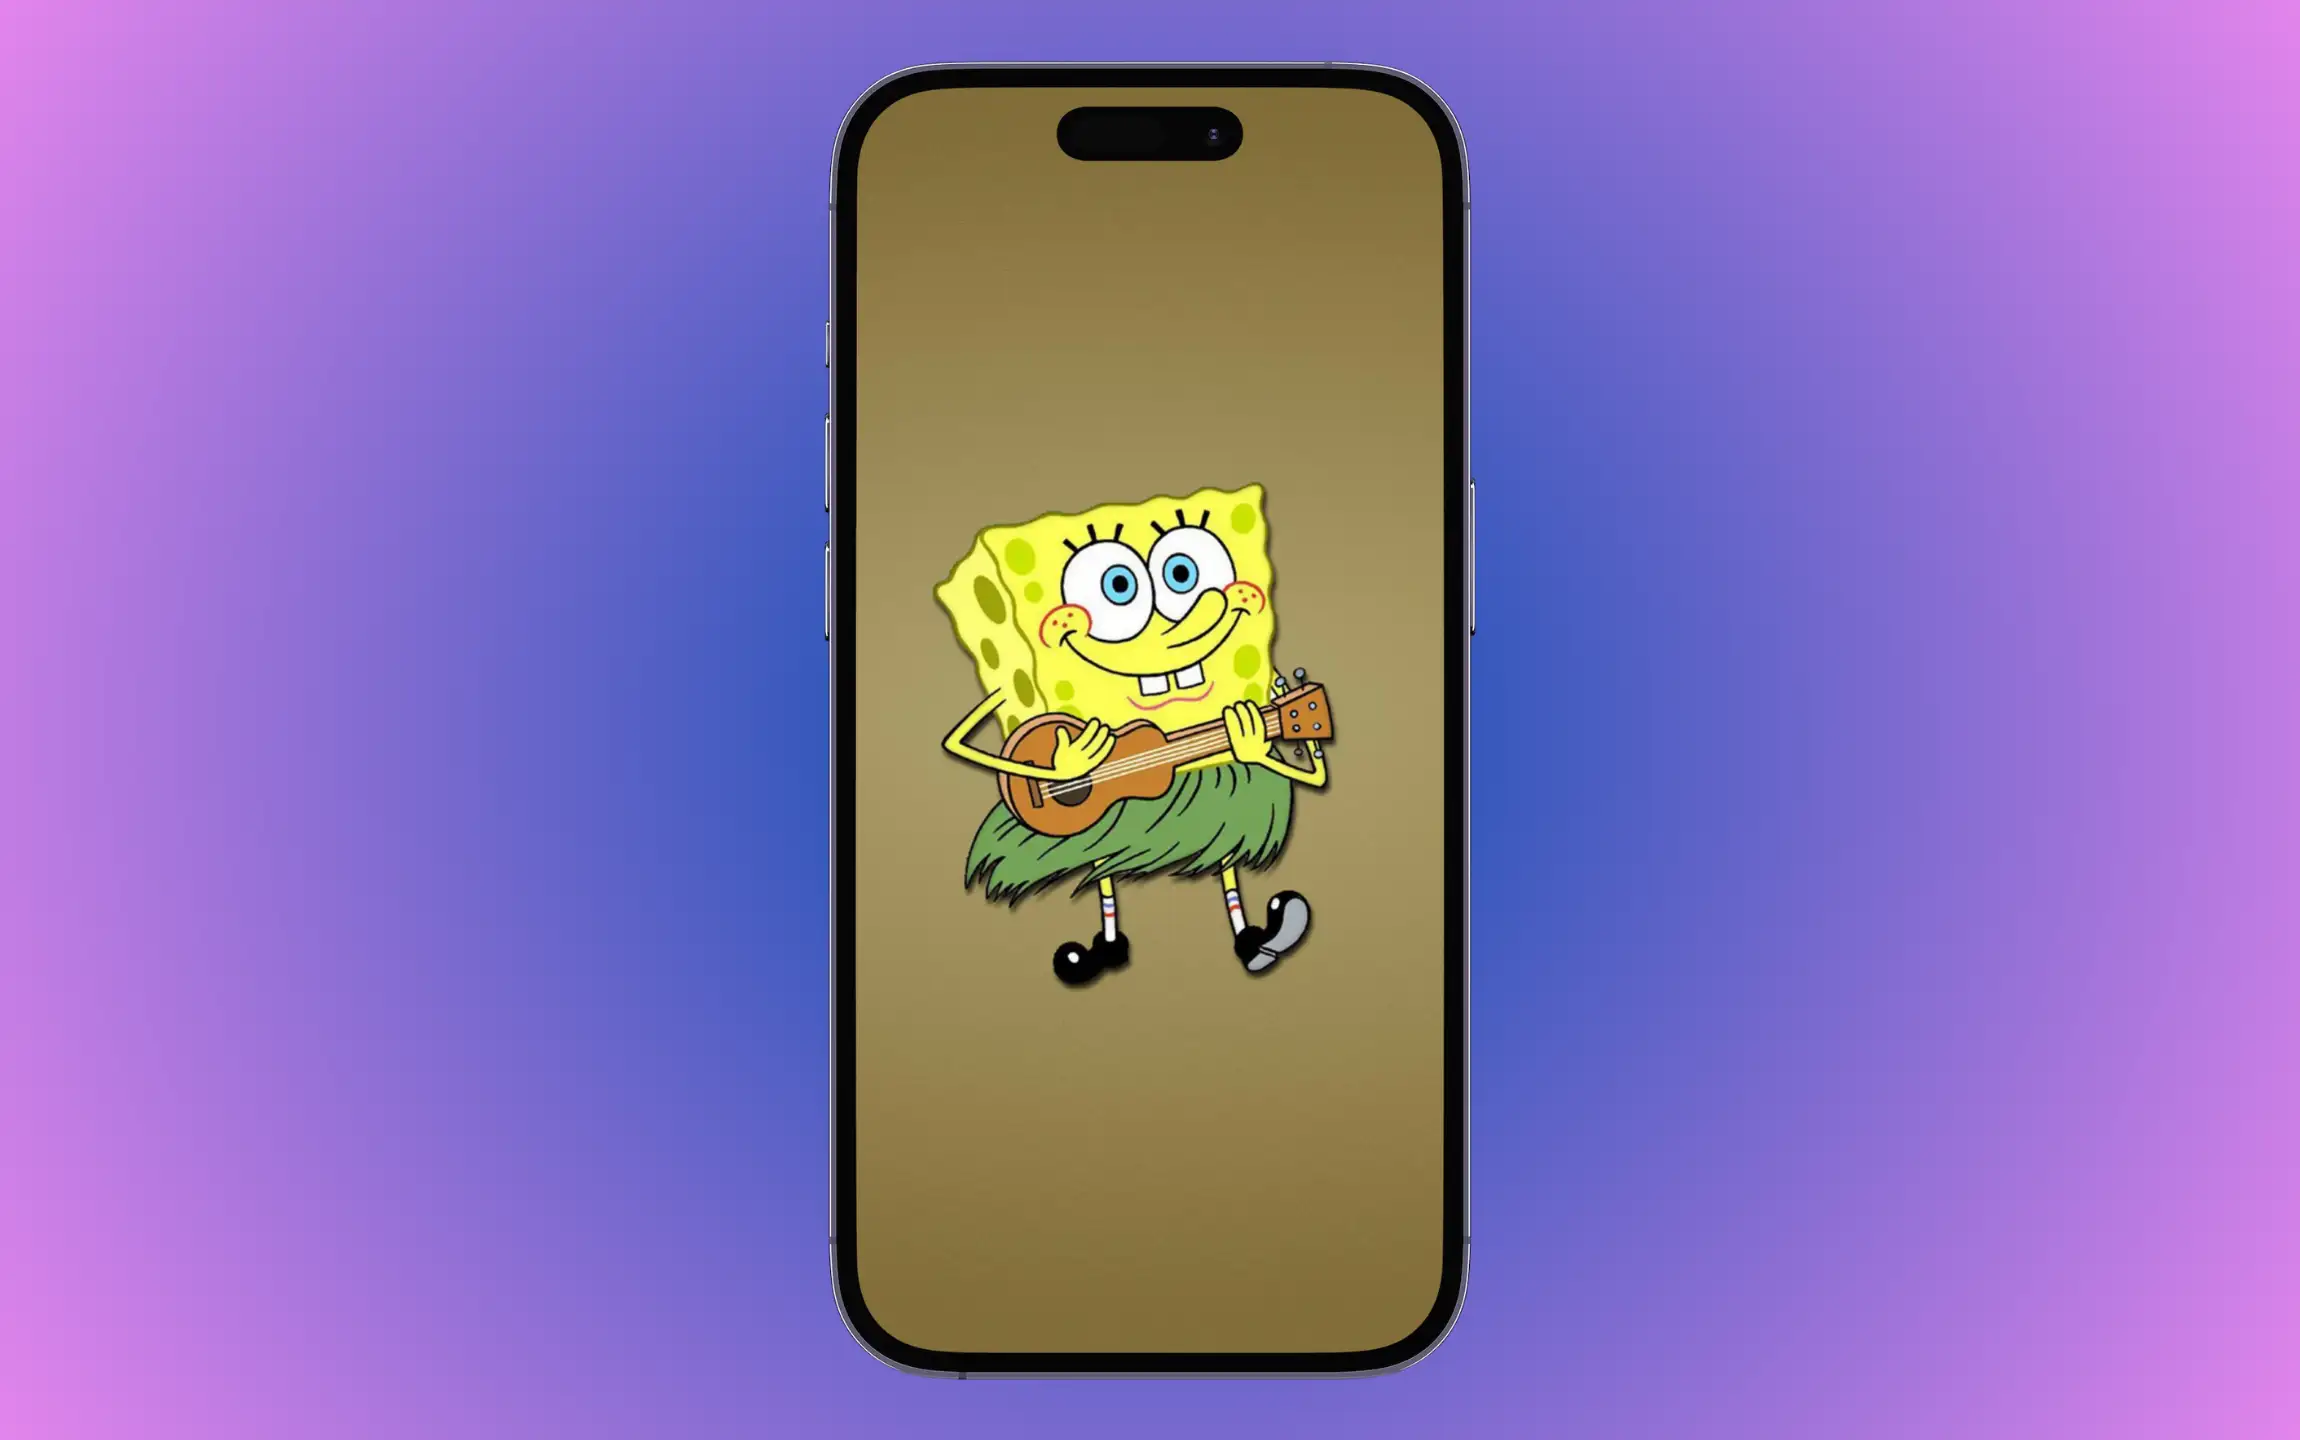 Funny Spongebob Squarepants iPhone wallpaper